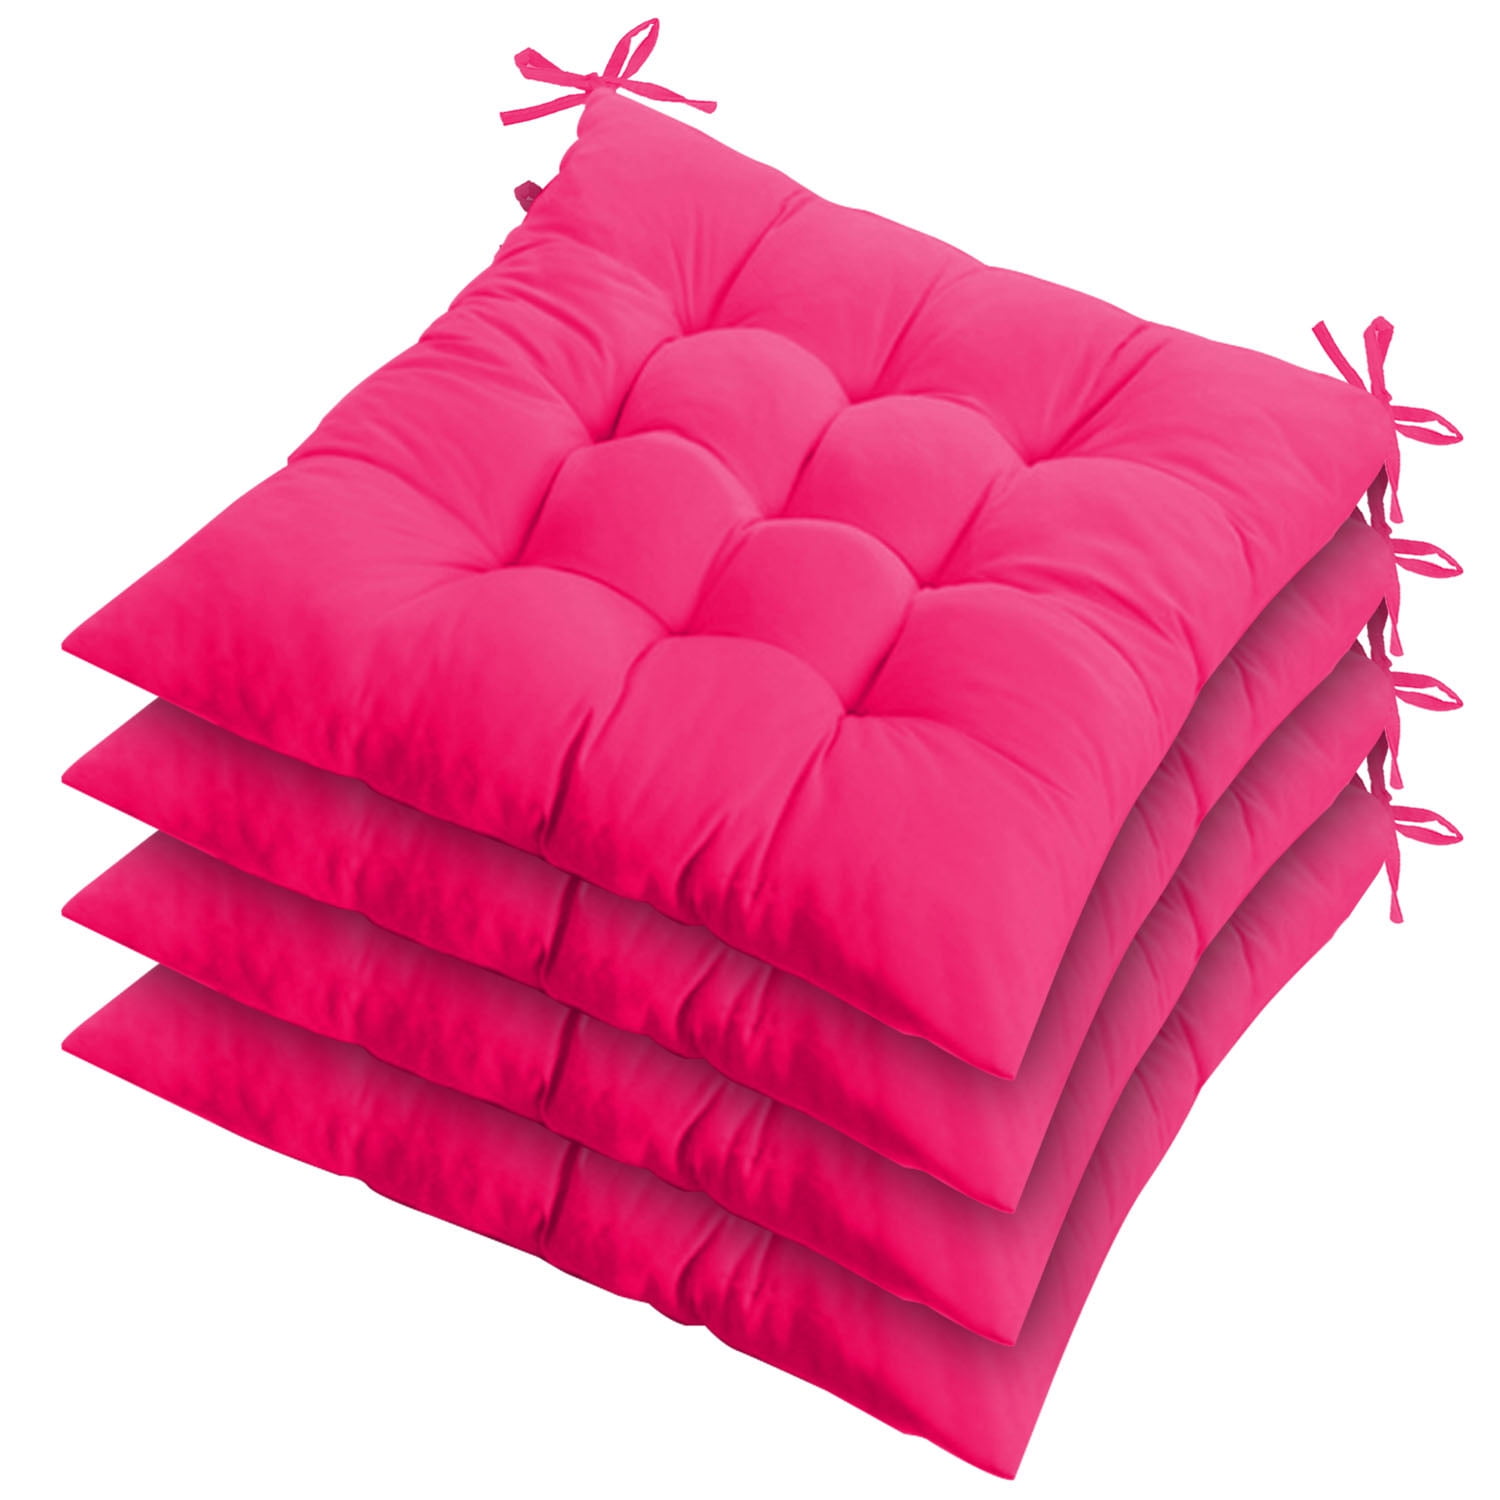 Smiling JuJu 3D Pink Rainbow Icing Sugar Donut Pillow Soft Bolster Sofa Cushion Chair Seat Pad Stuffed Plush Toy Home Decor USA Seller